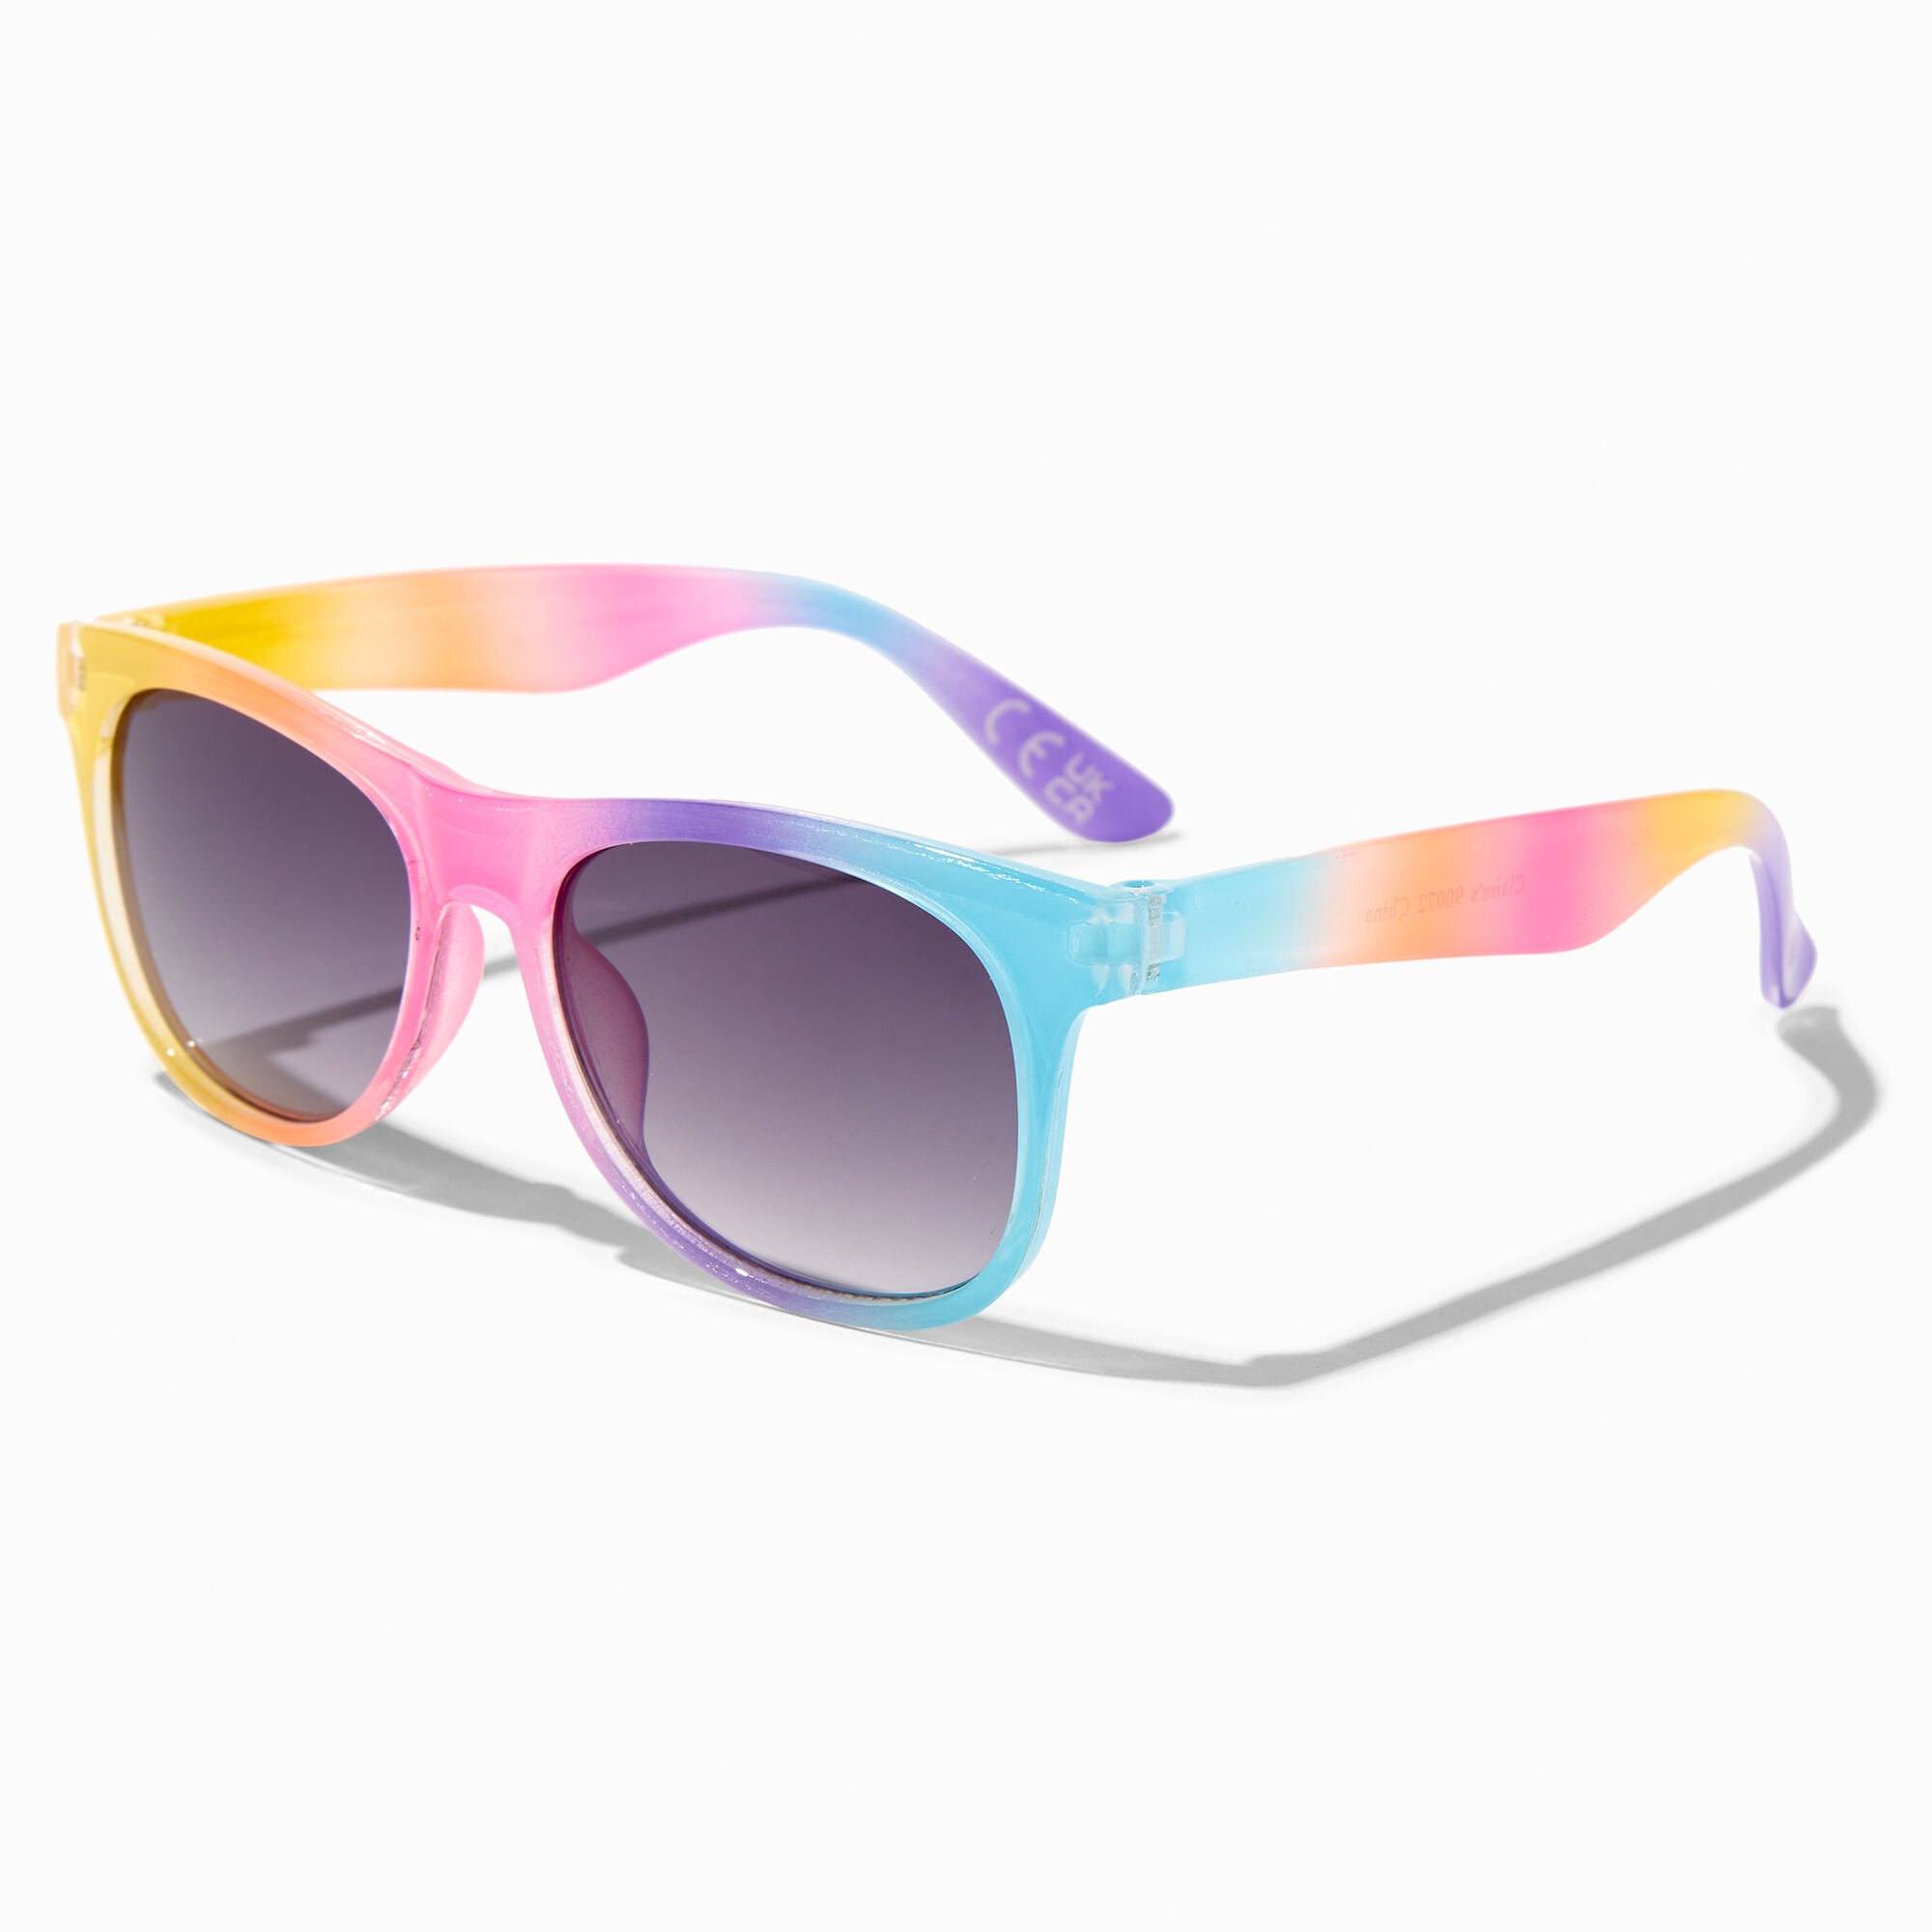 View Claires Club Retro Sunglasses Rainbow information